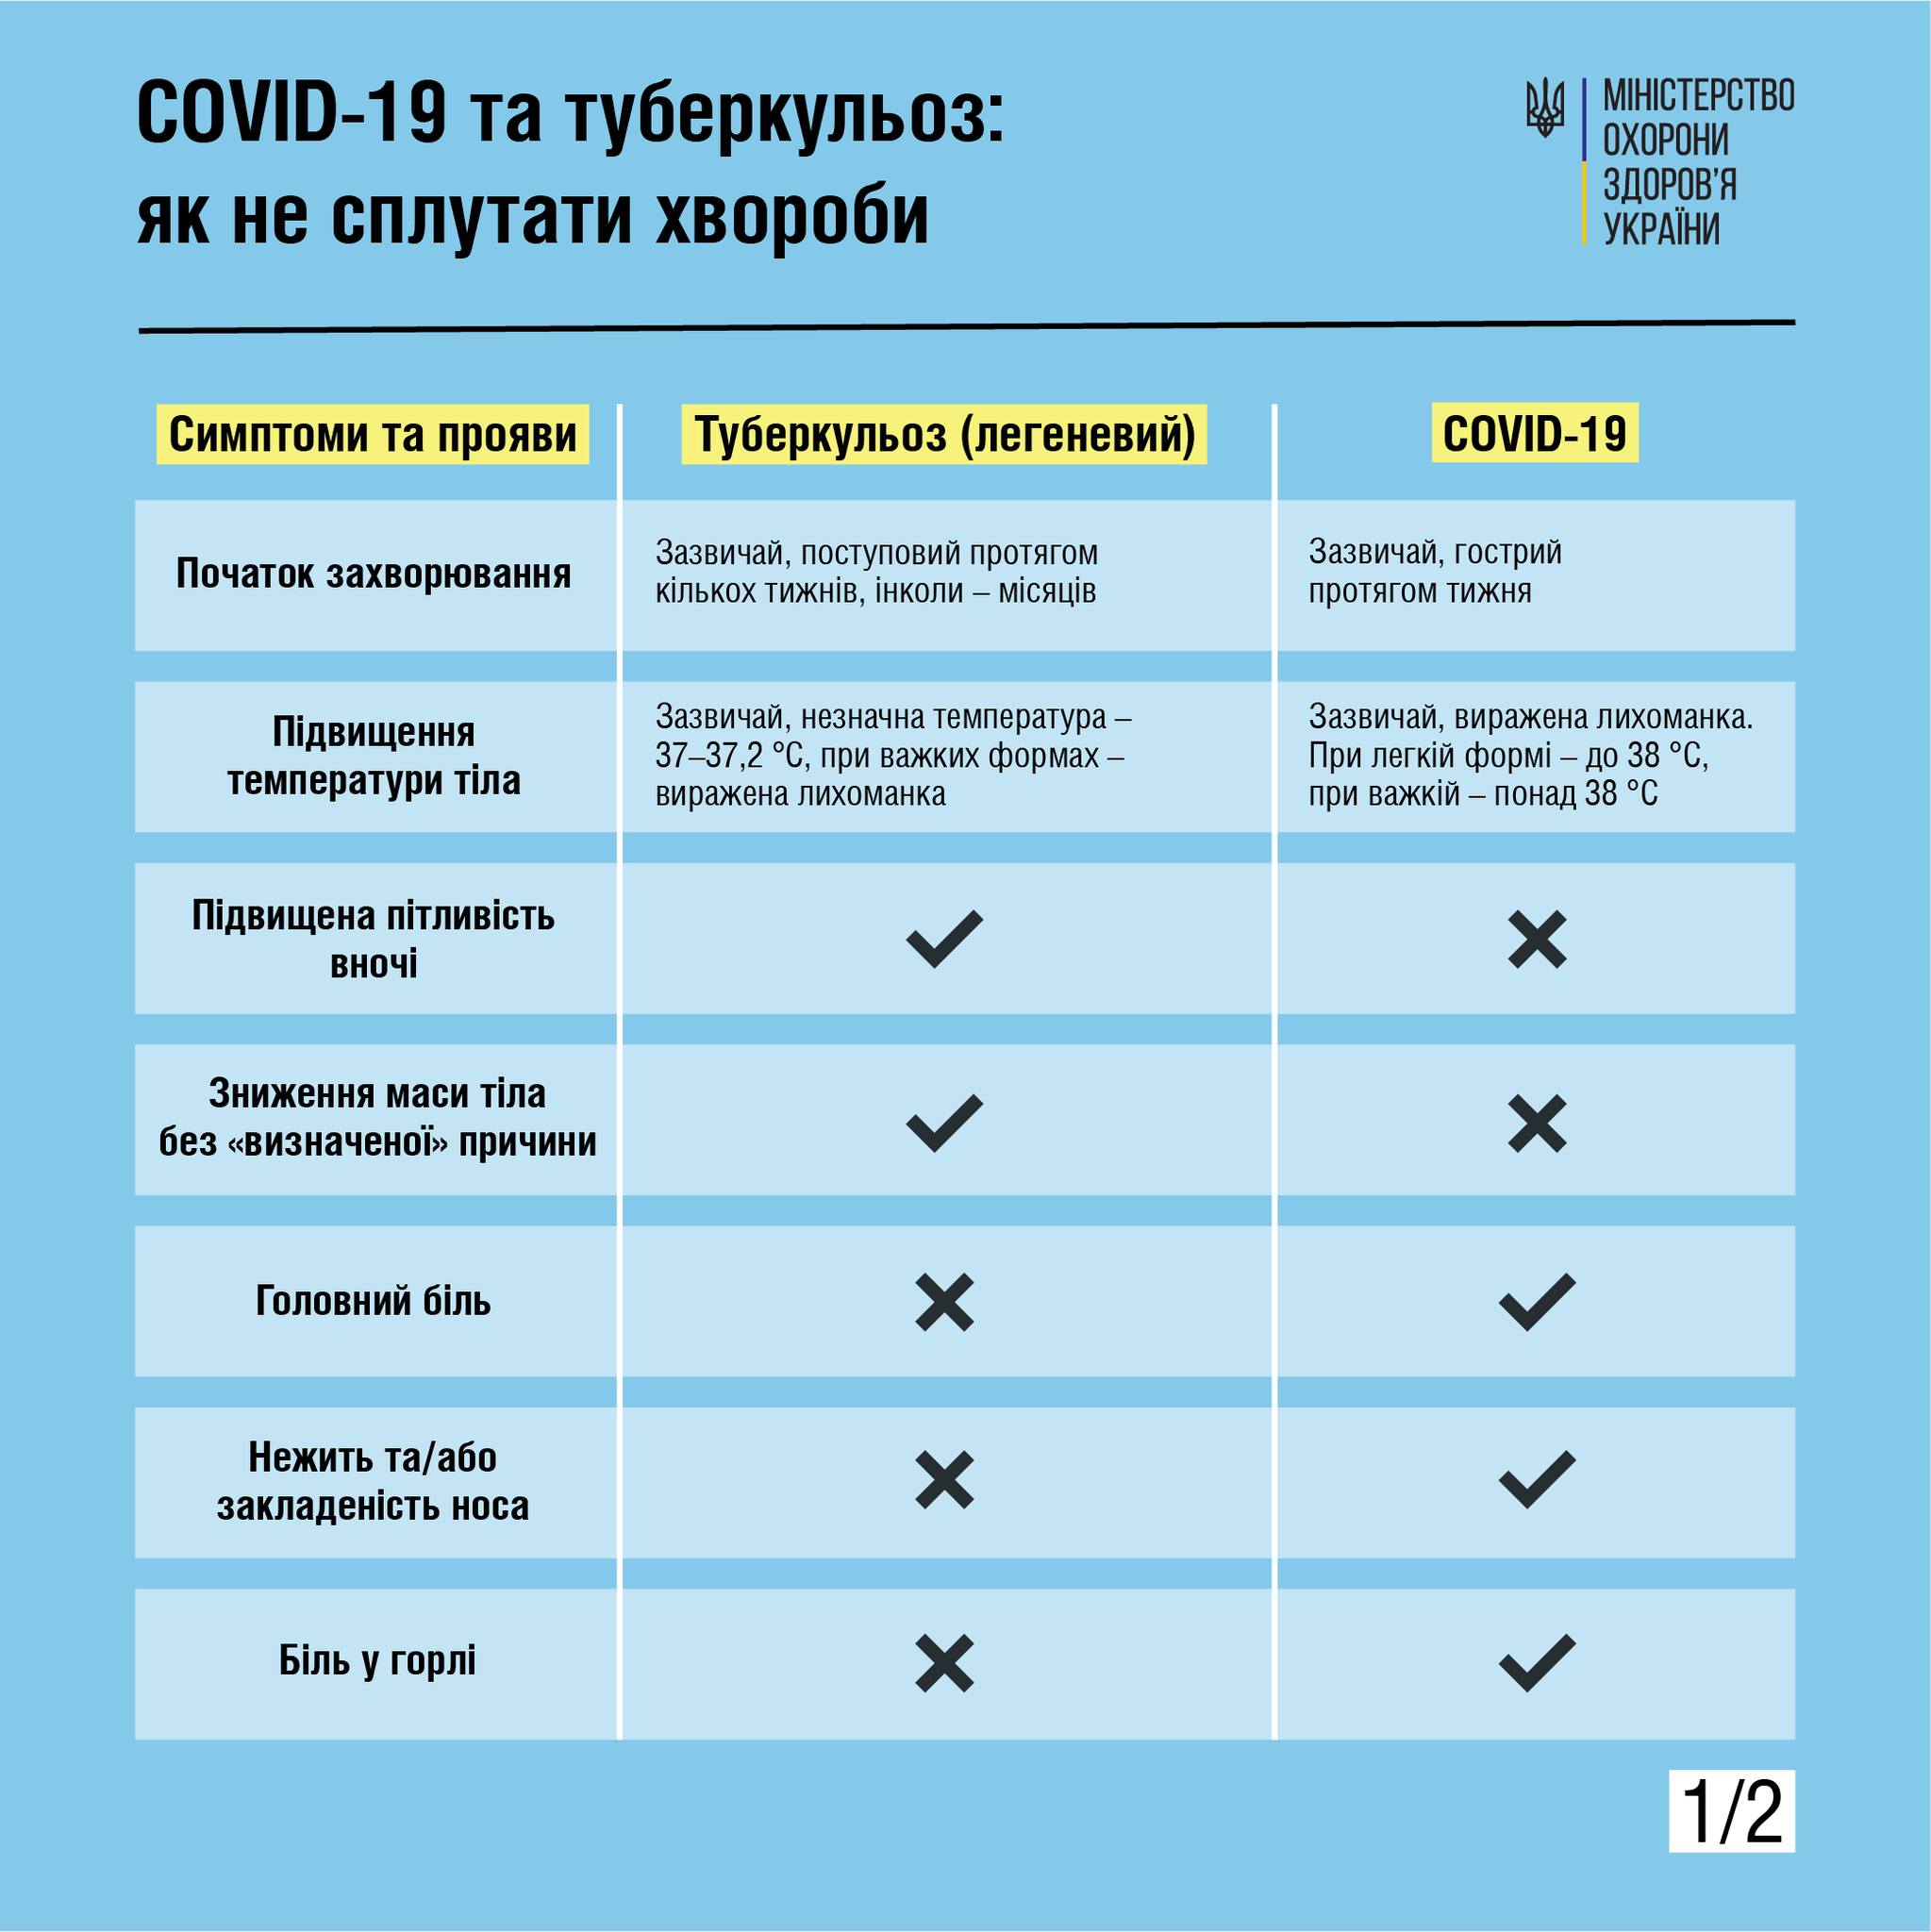 Сравнительная характеристика симптомов туберкулеза и COVID-19. Инфографика: moz.gov.ua